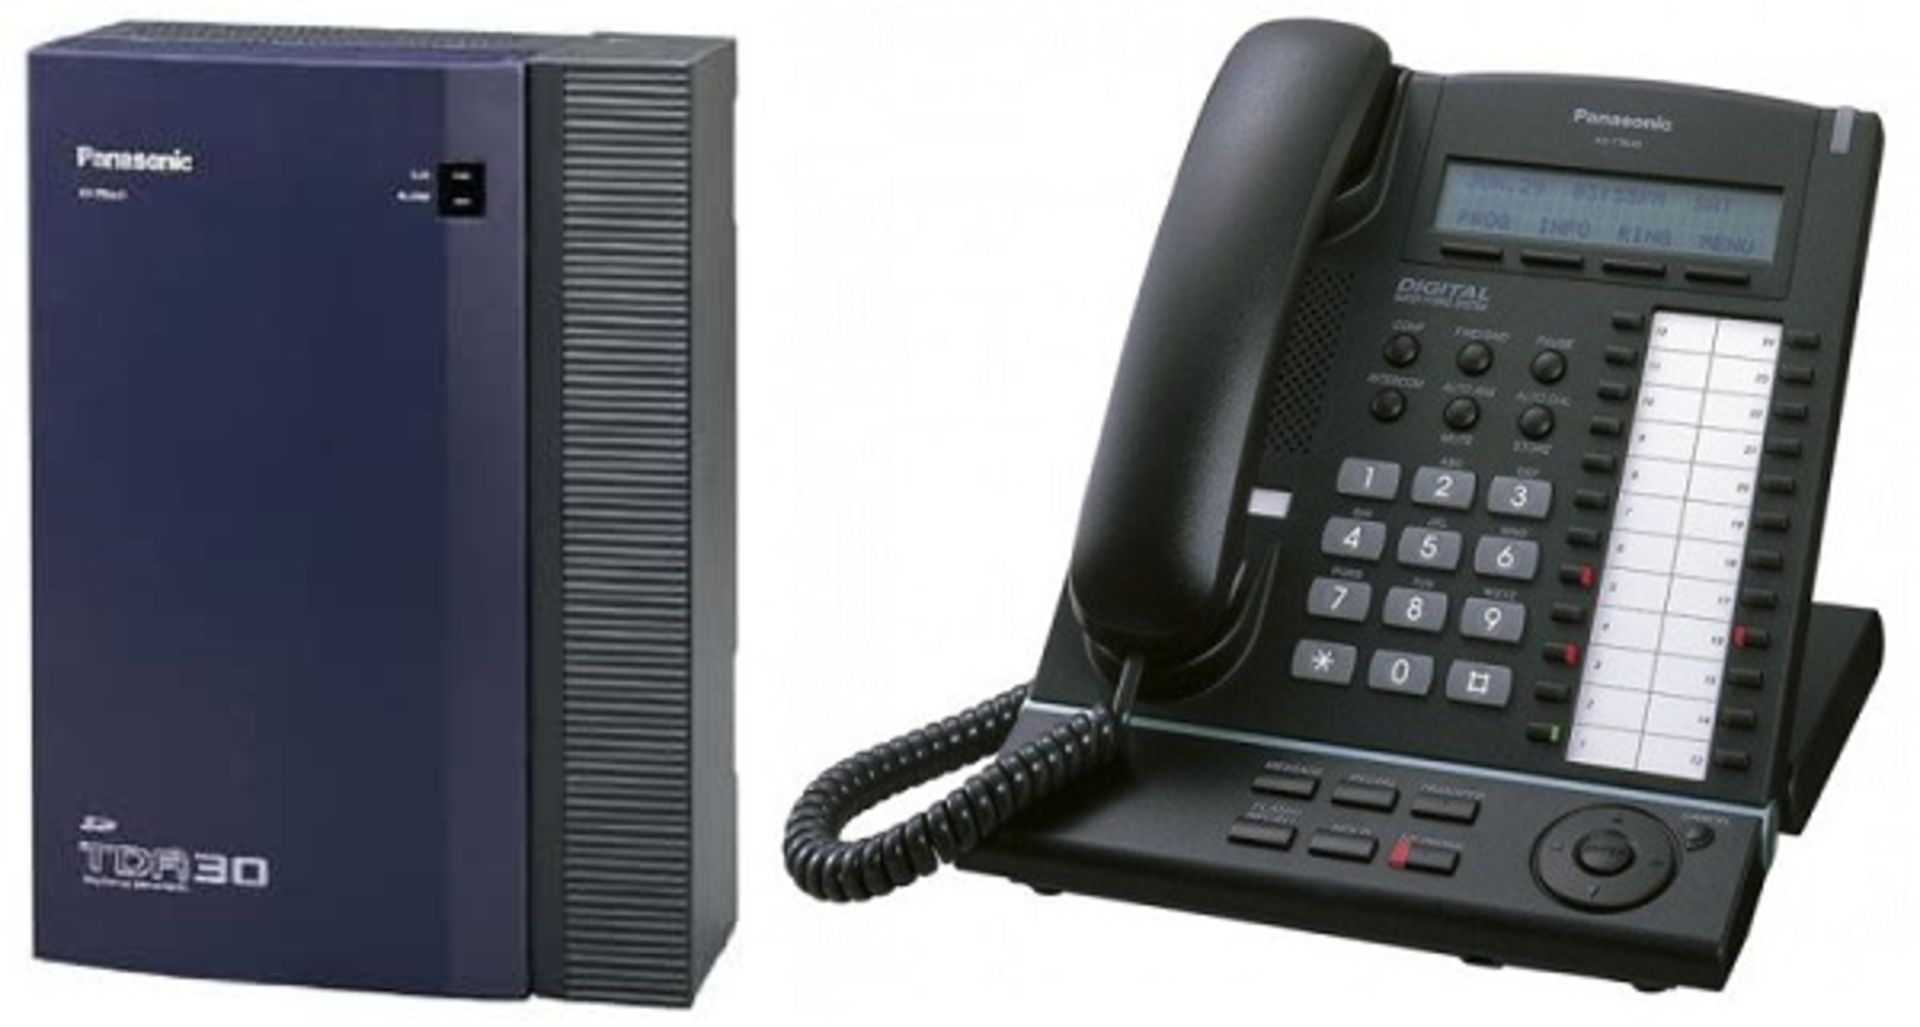 1 x Panasonic KXTDA30 Office Telephone System With 206 Electronic Modular Switching System